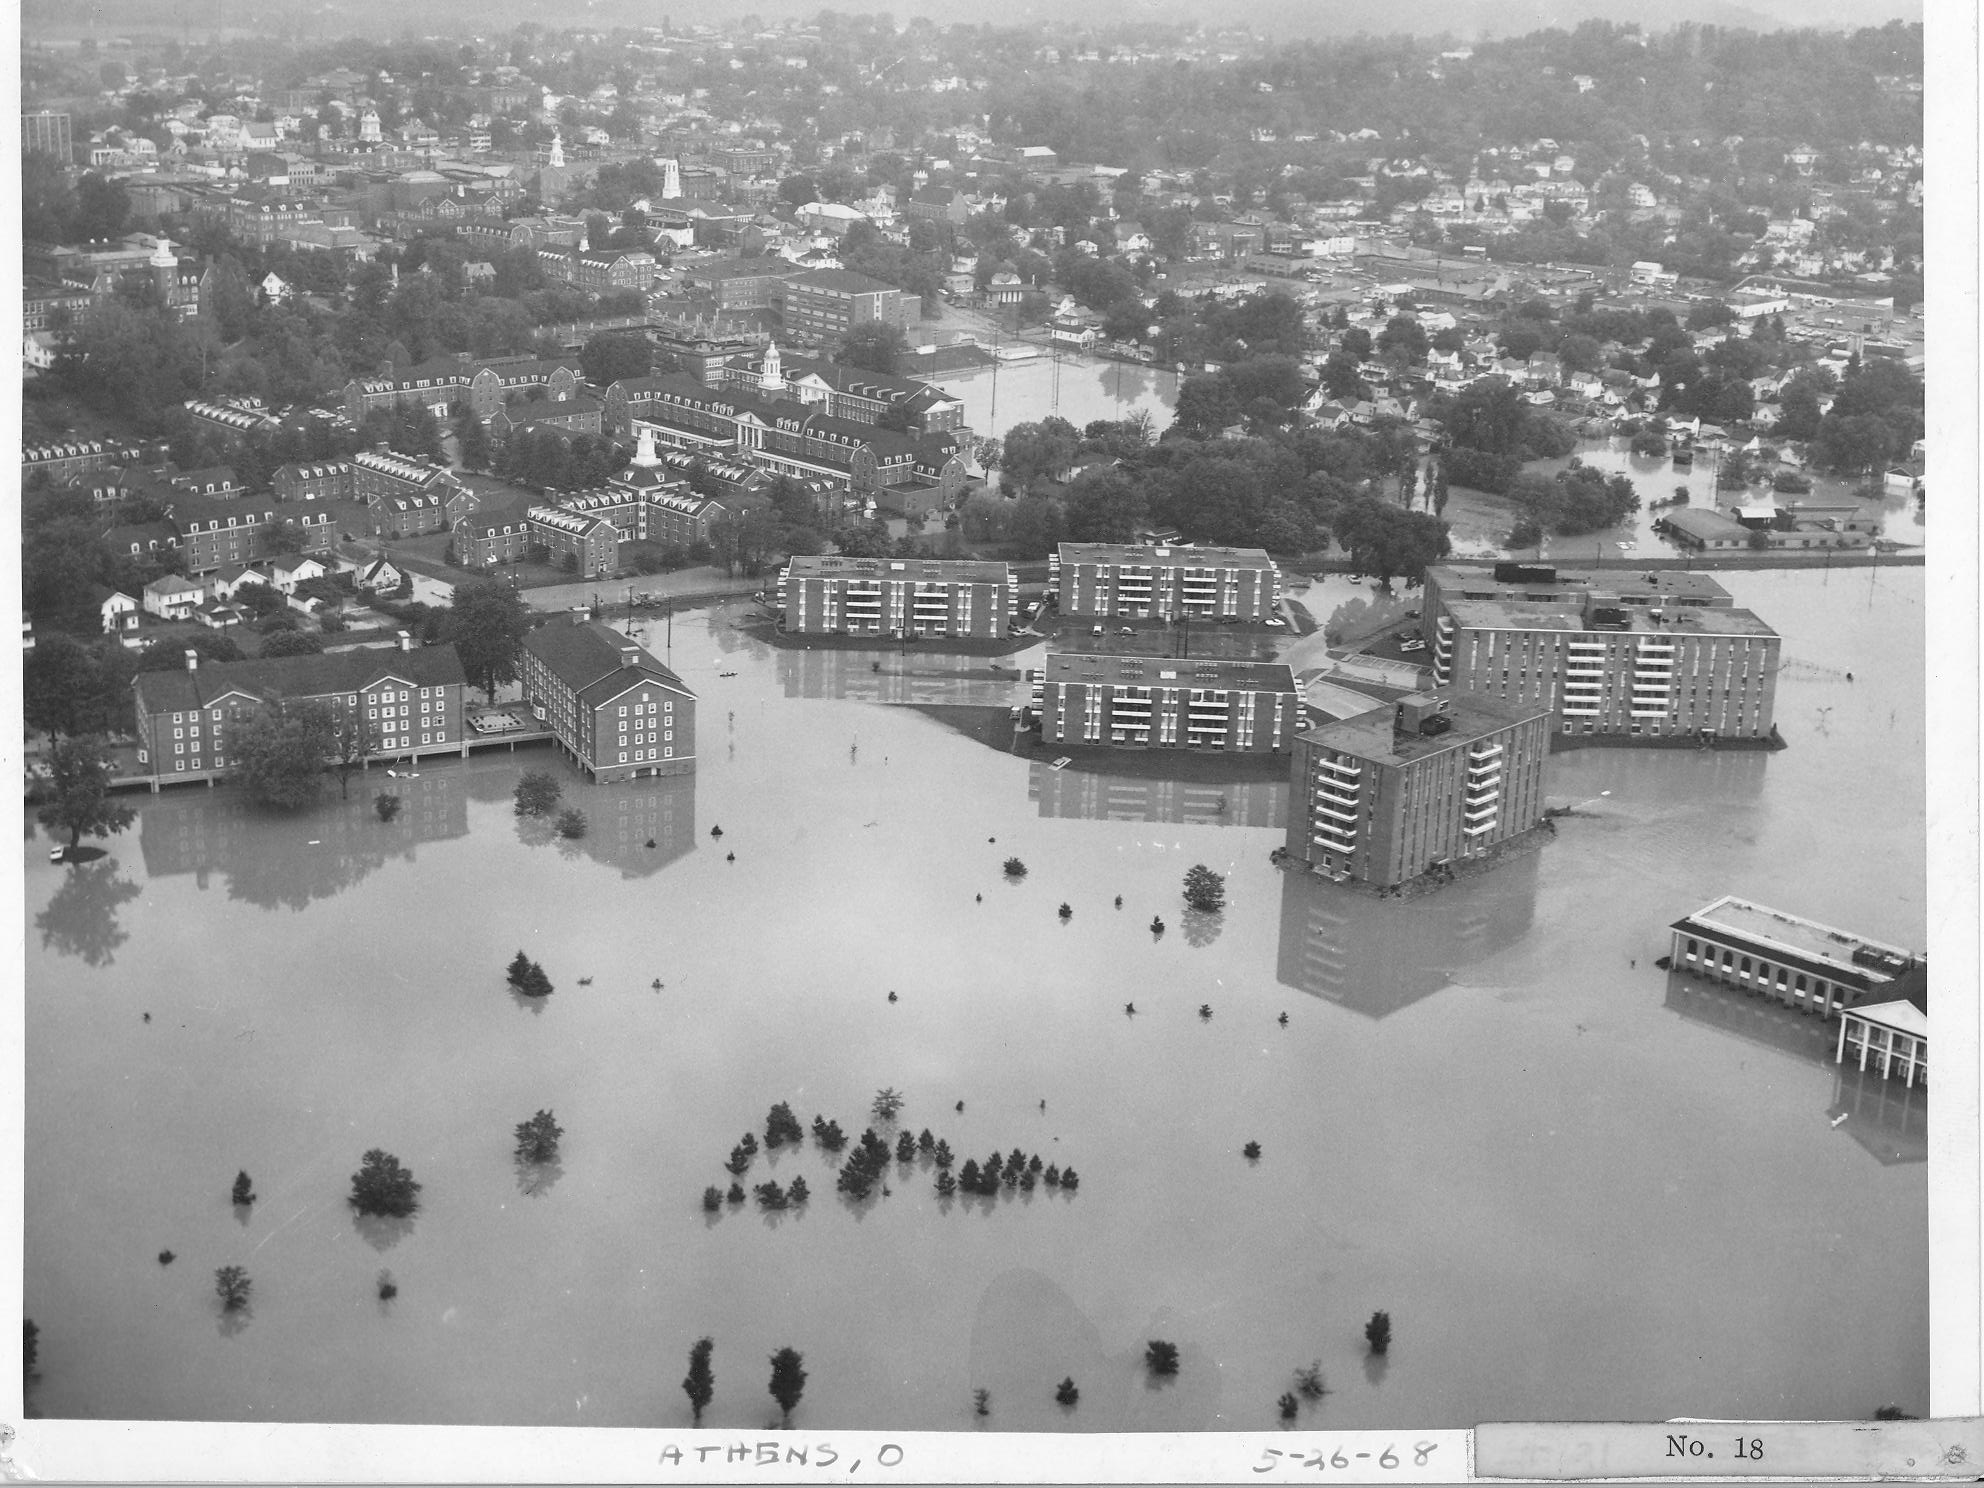 1968 Flood in Athens Ohio, East Green of Ohio University